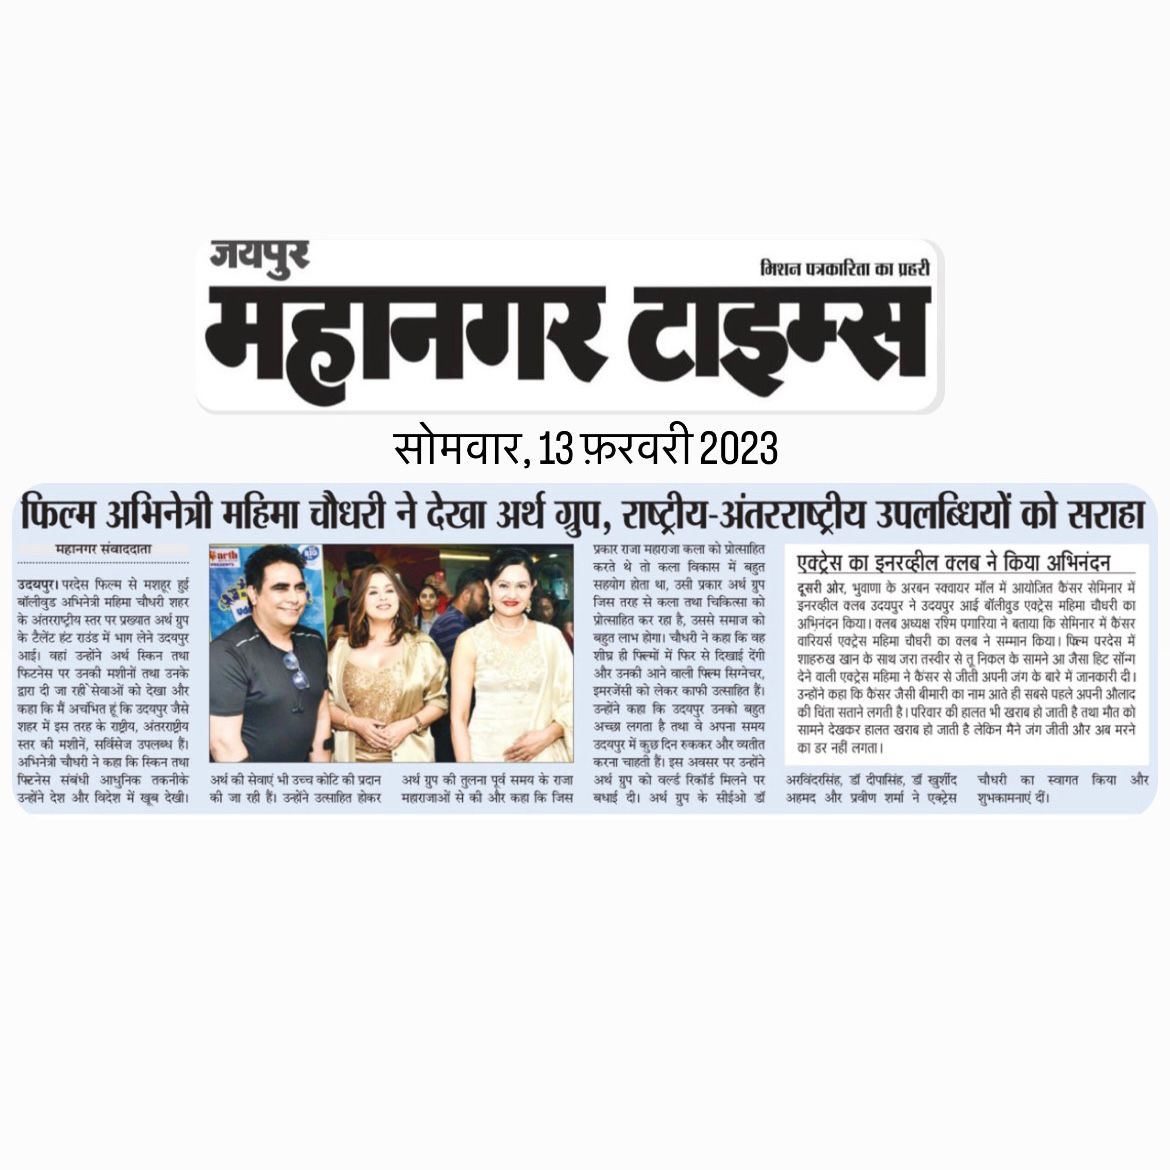 Famous film actress Mahima Chowdhary also praised arth Group